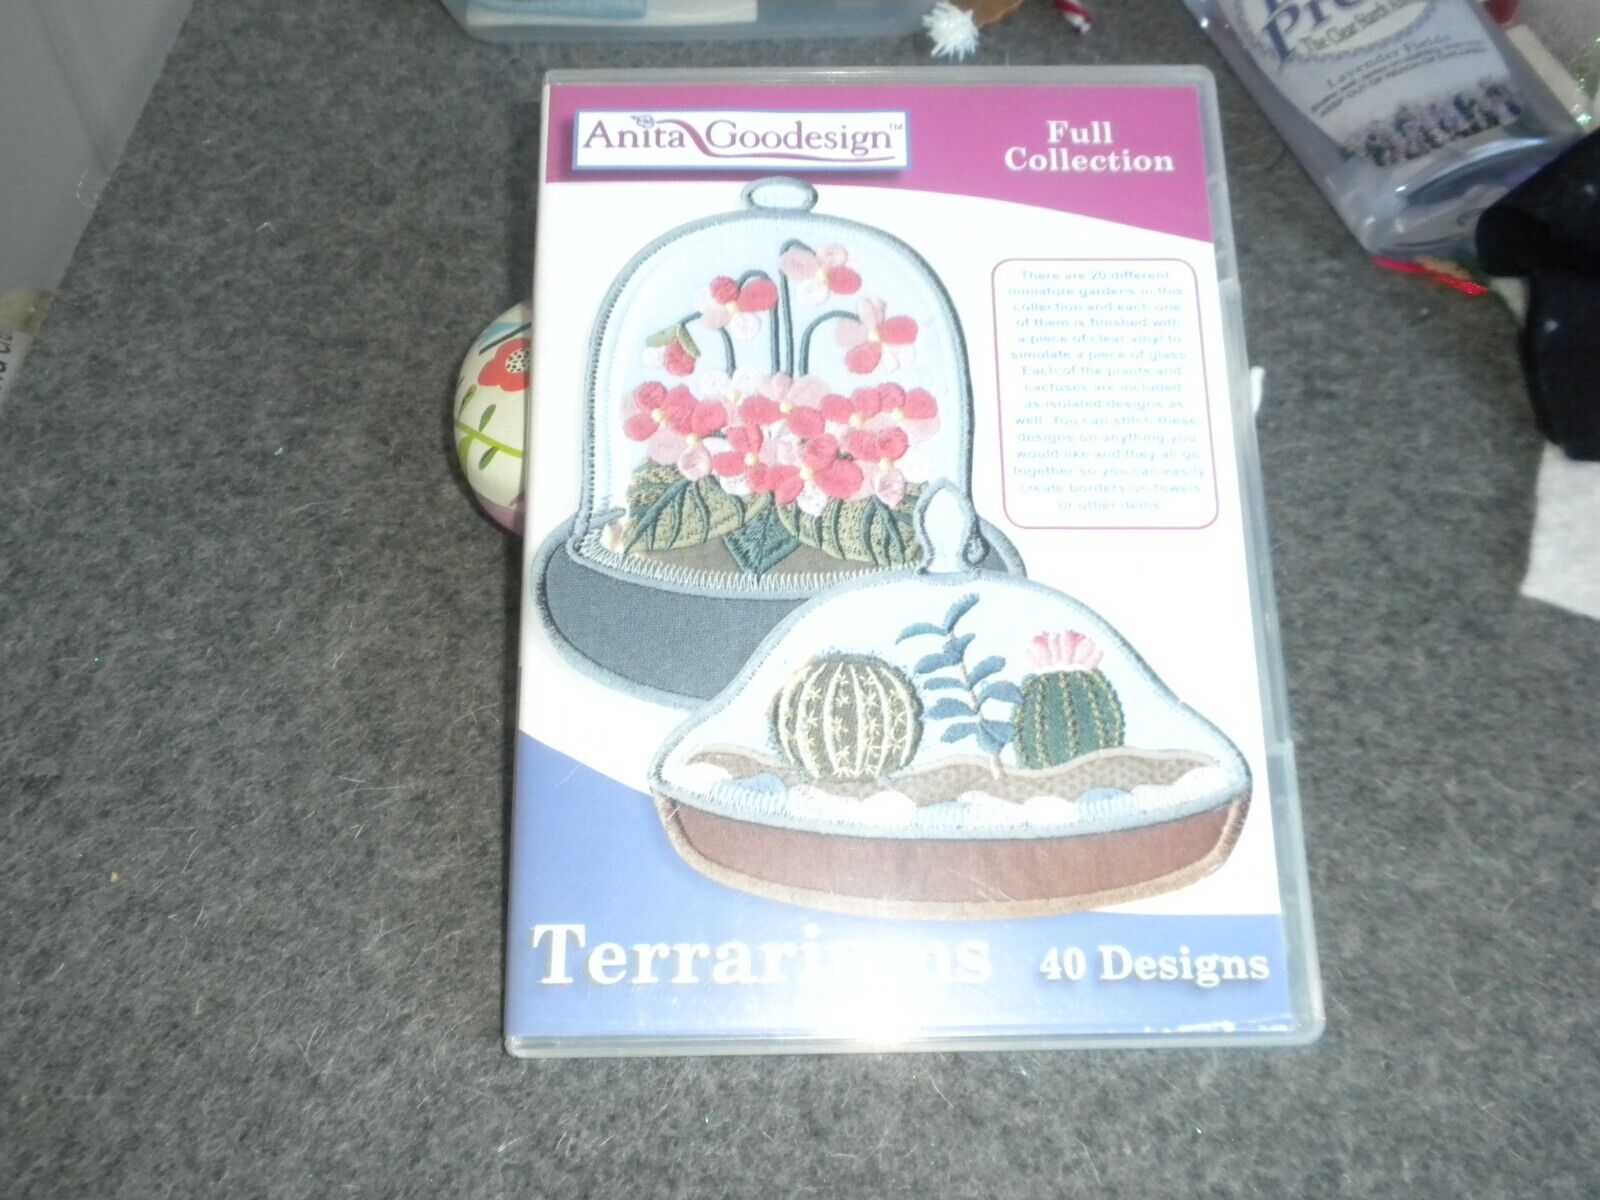 Anita Goodesign Terrariums Full Collection Embroidery CD 40 Designs 254AGHD